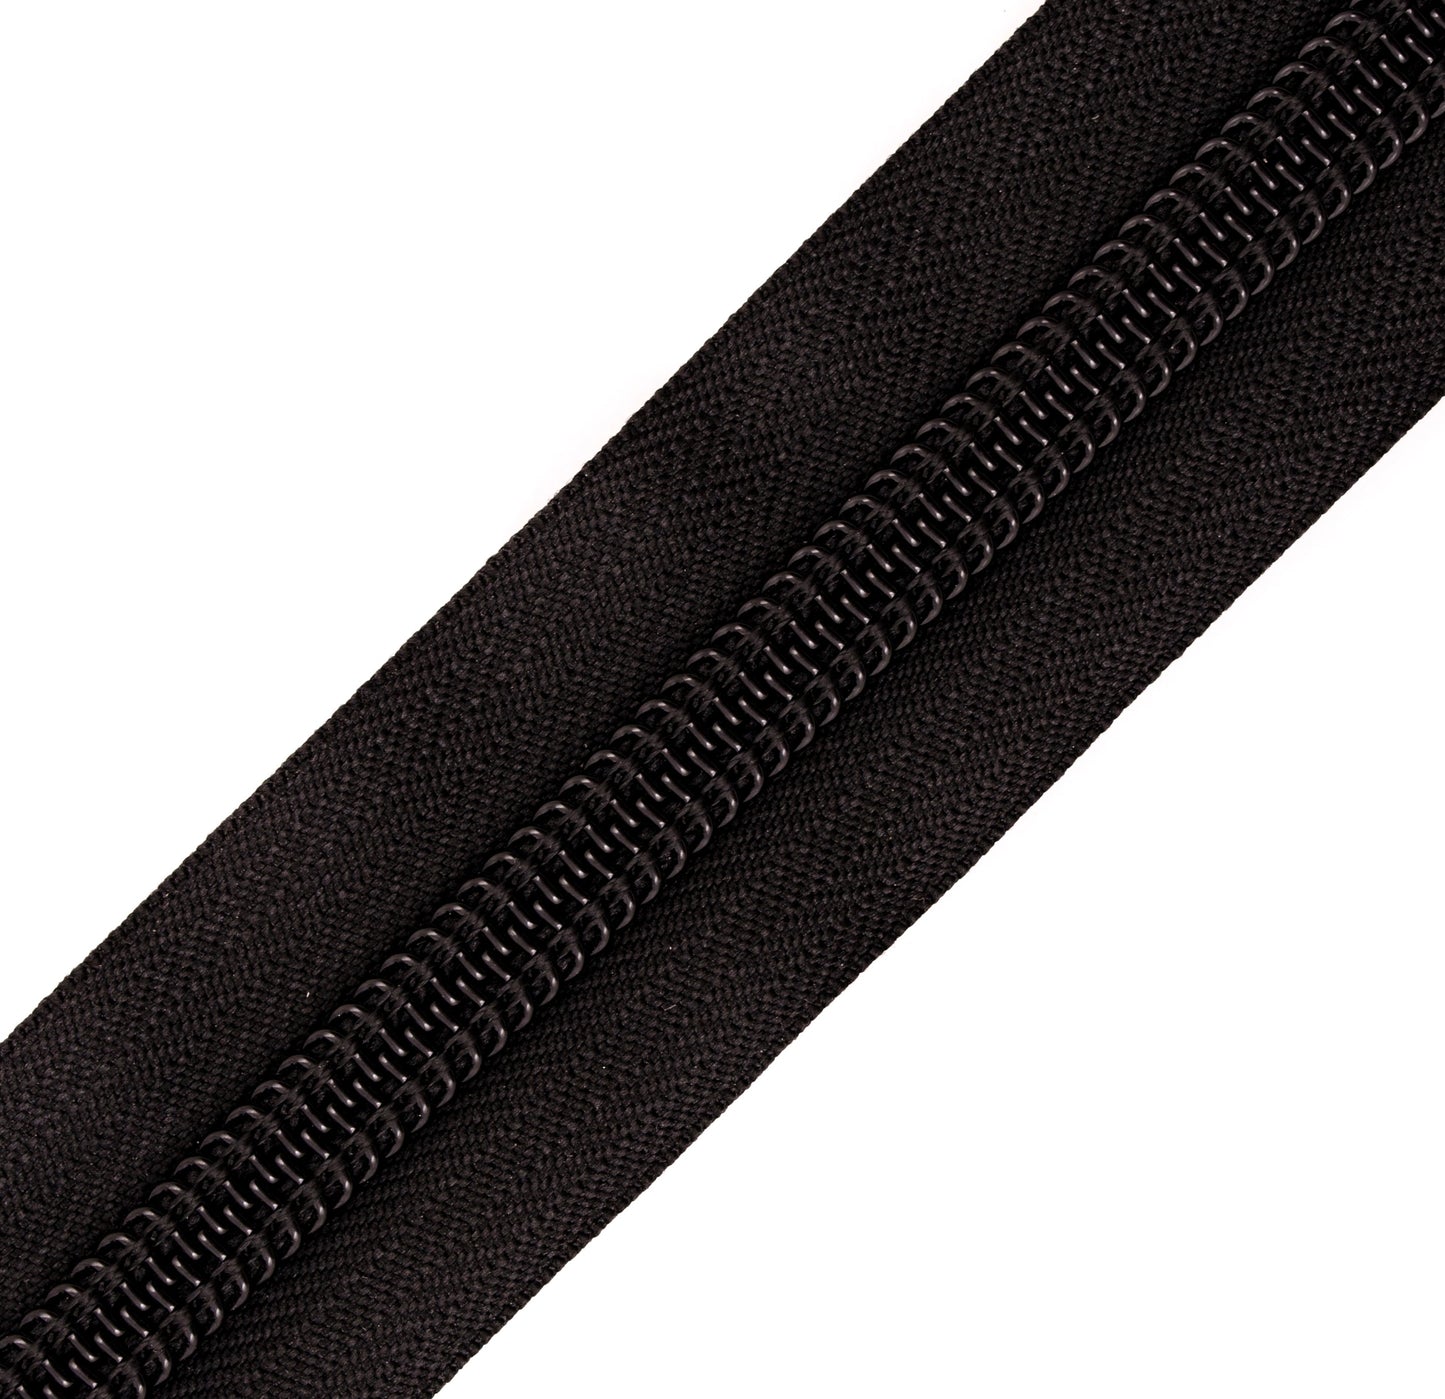 Coil YKK zipper 10RC (580) Black